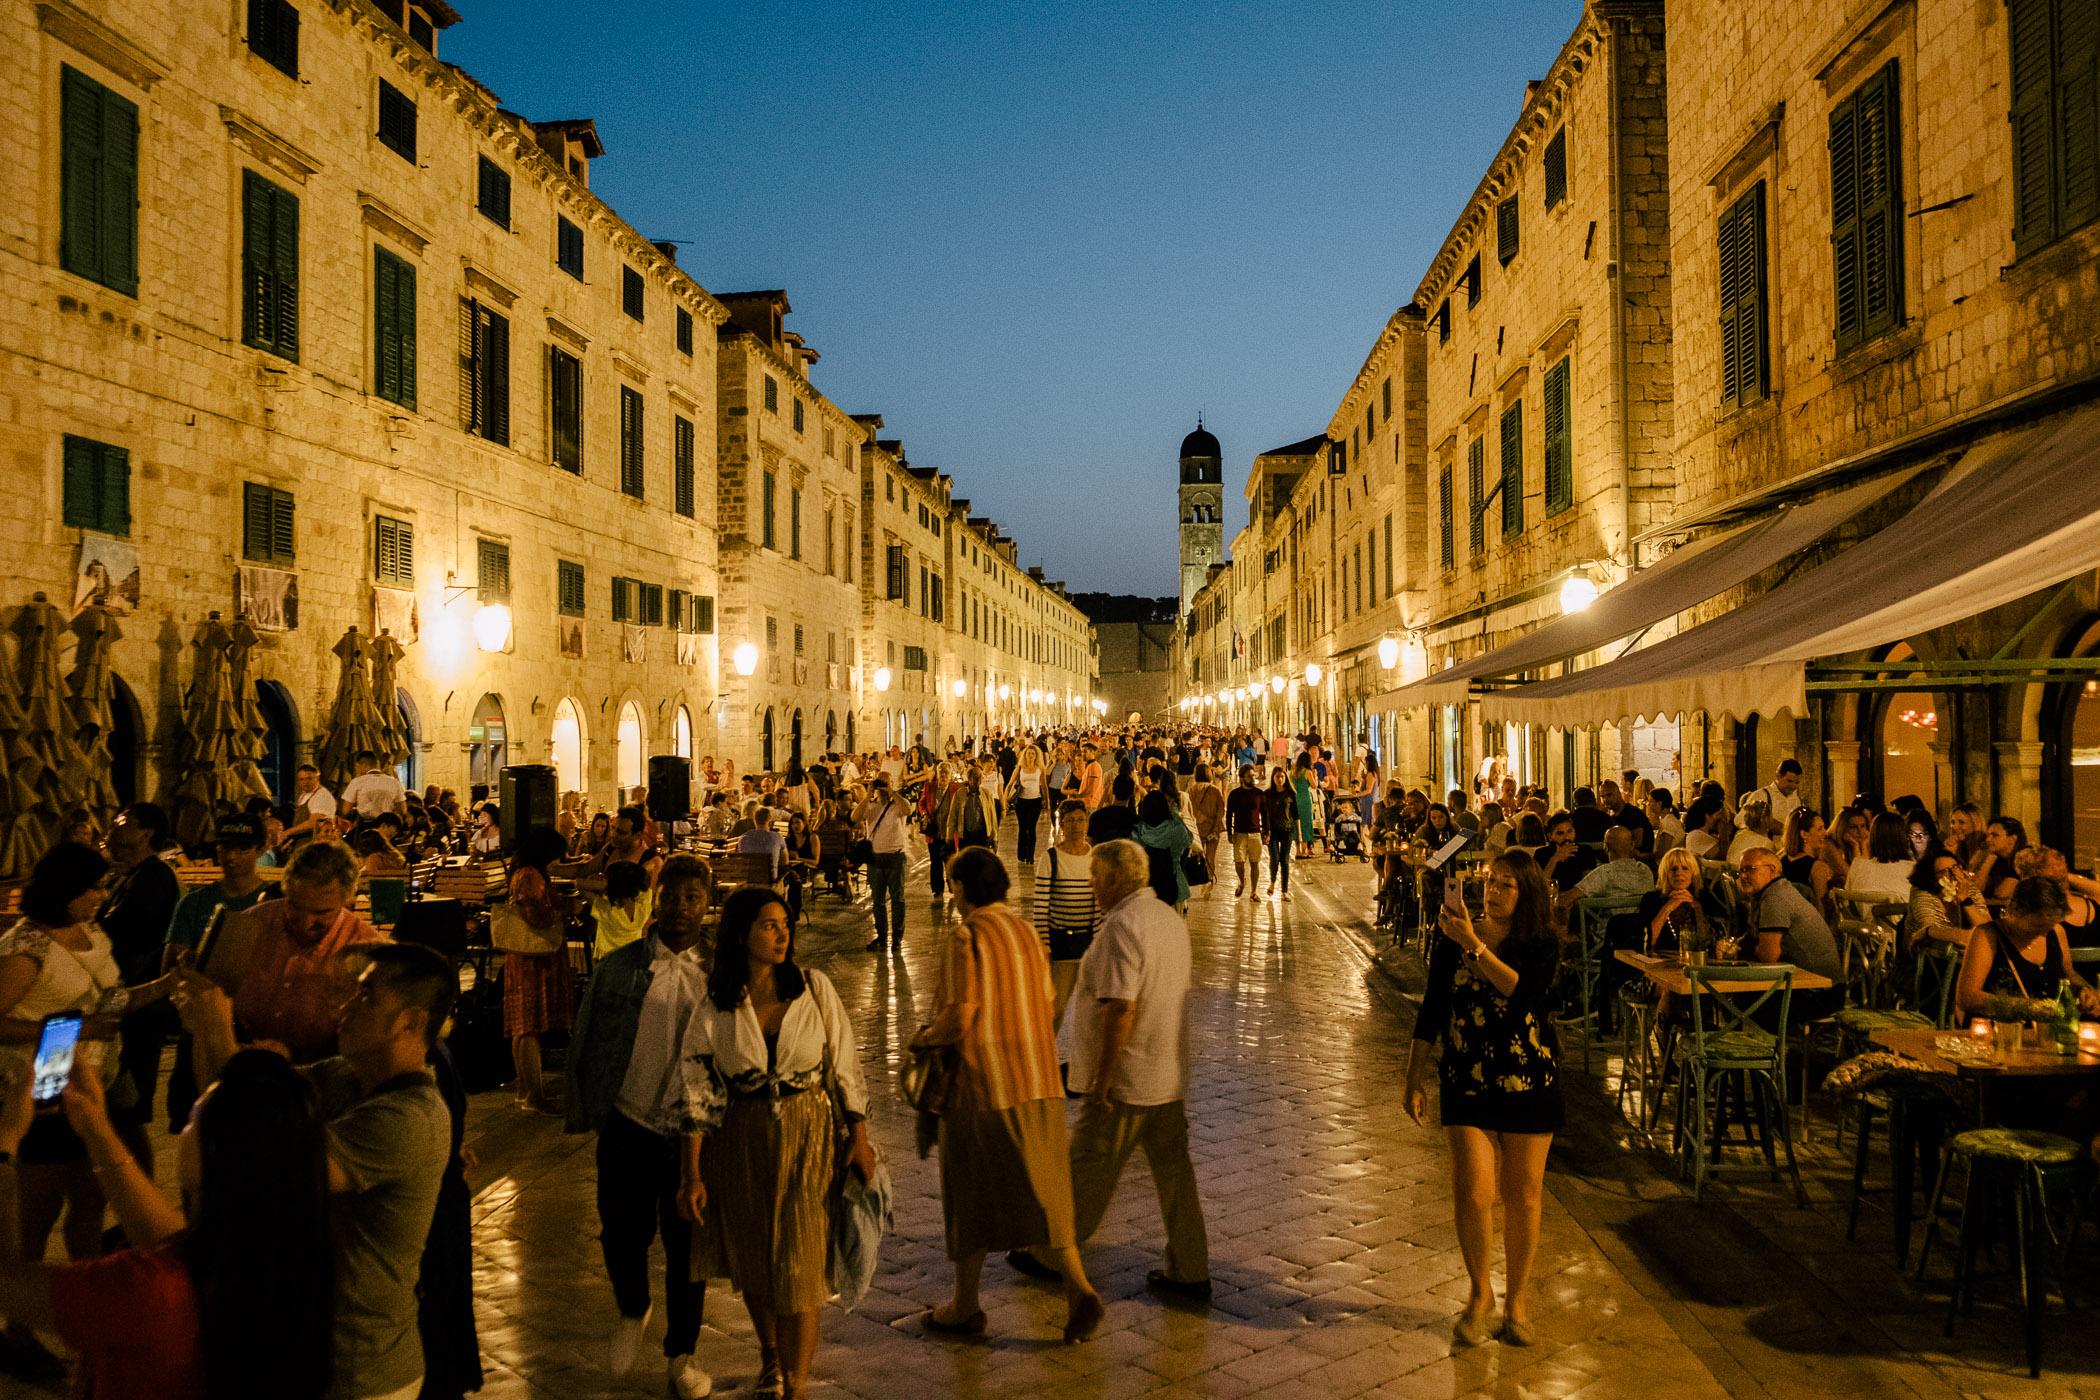 Dubrovnik for Culture Trip x British Airways